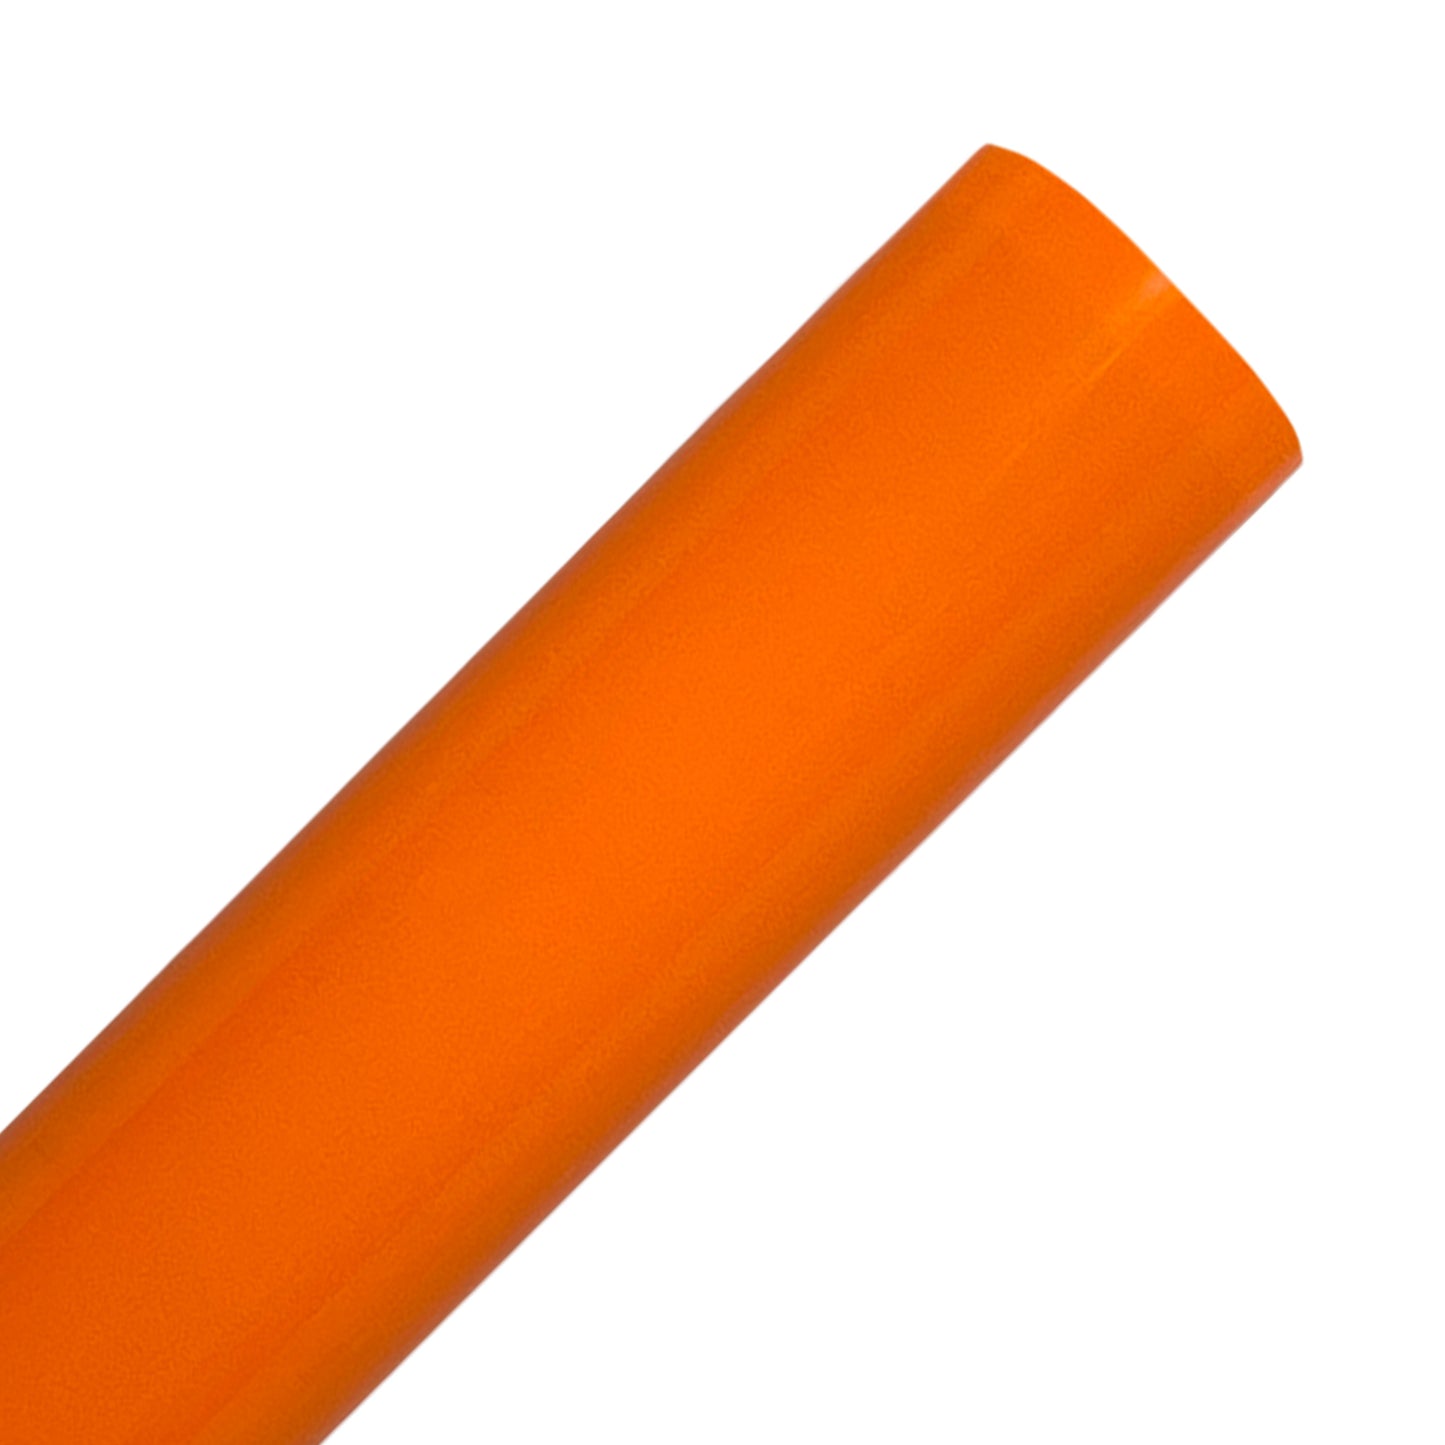 Bright Orange Heat Transfer Vinyl Rolls By Craftables